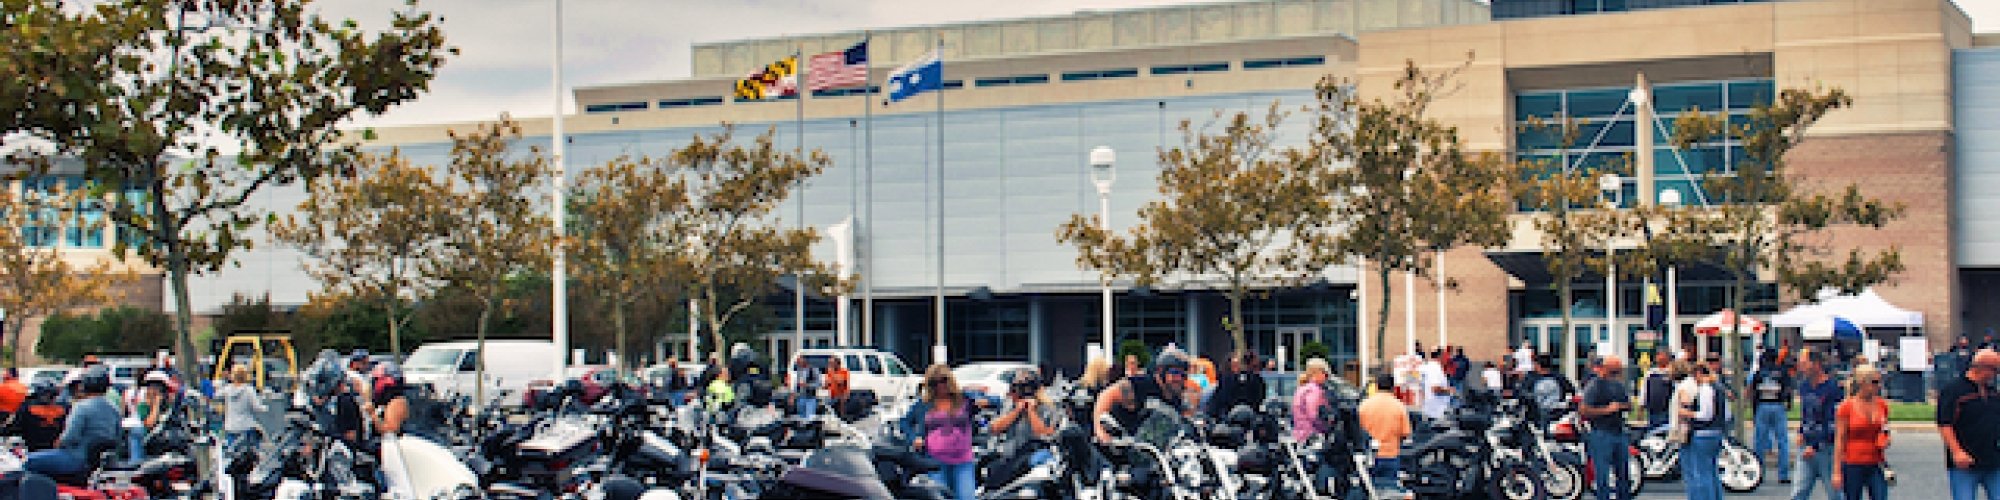 BikeFest in Ocean City, MD Visit Maryland's Coast